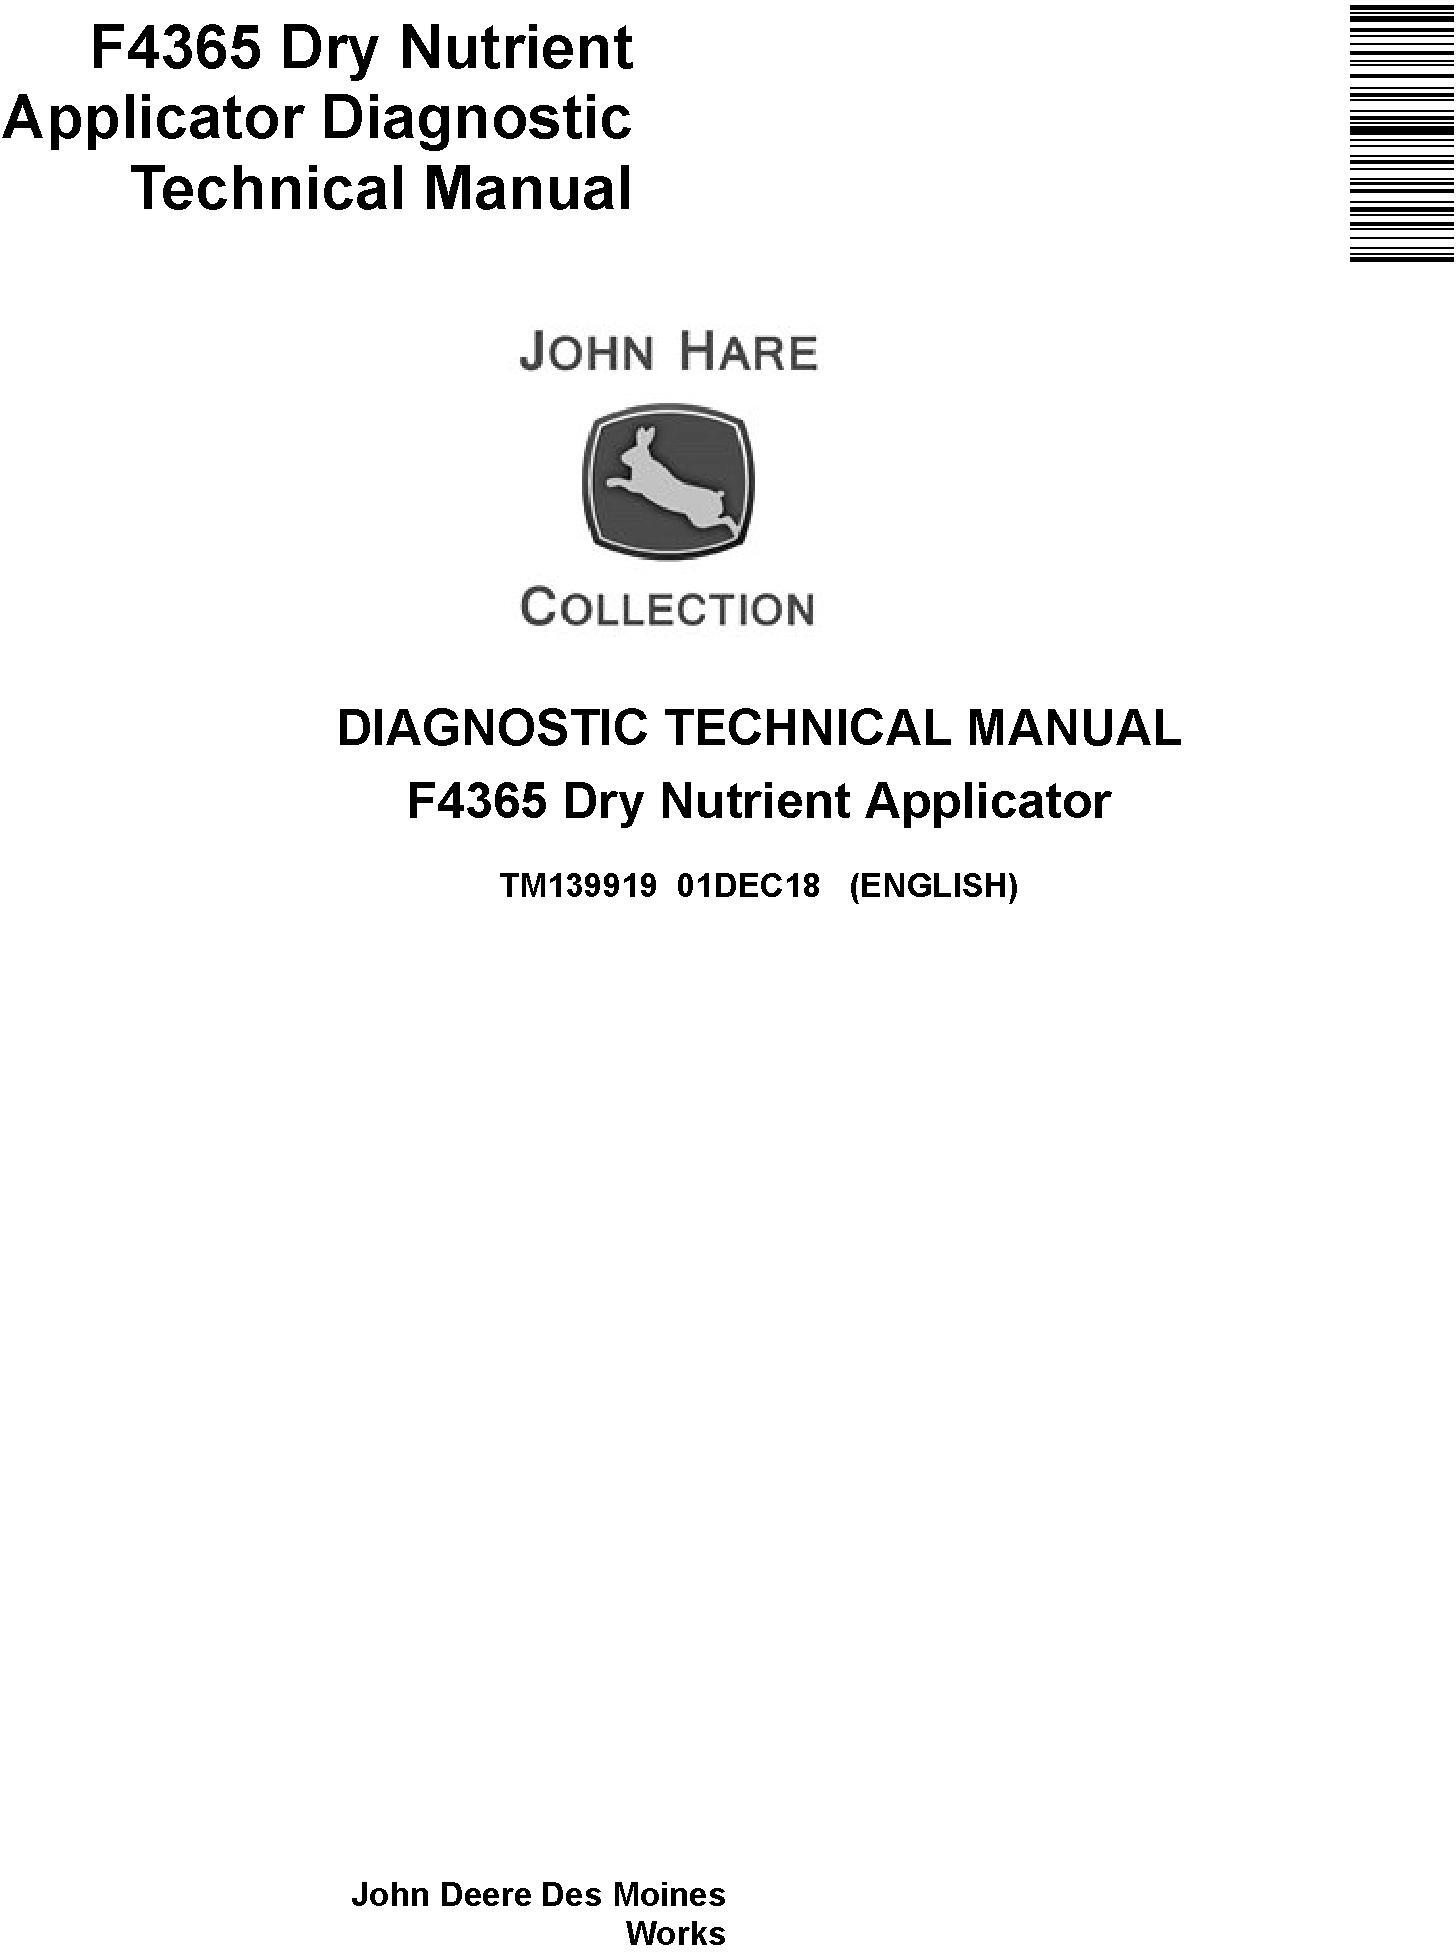 John Deere F4365 Dry Nutrient Applicator Diagnostic Technical Service Manual (TM139919) - 19241